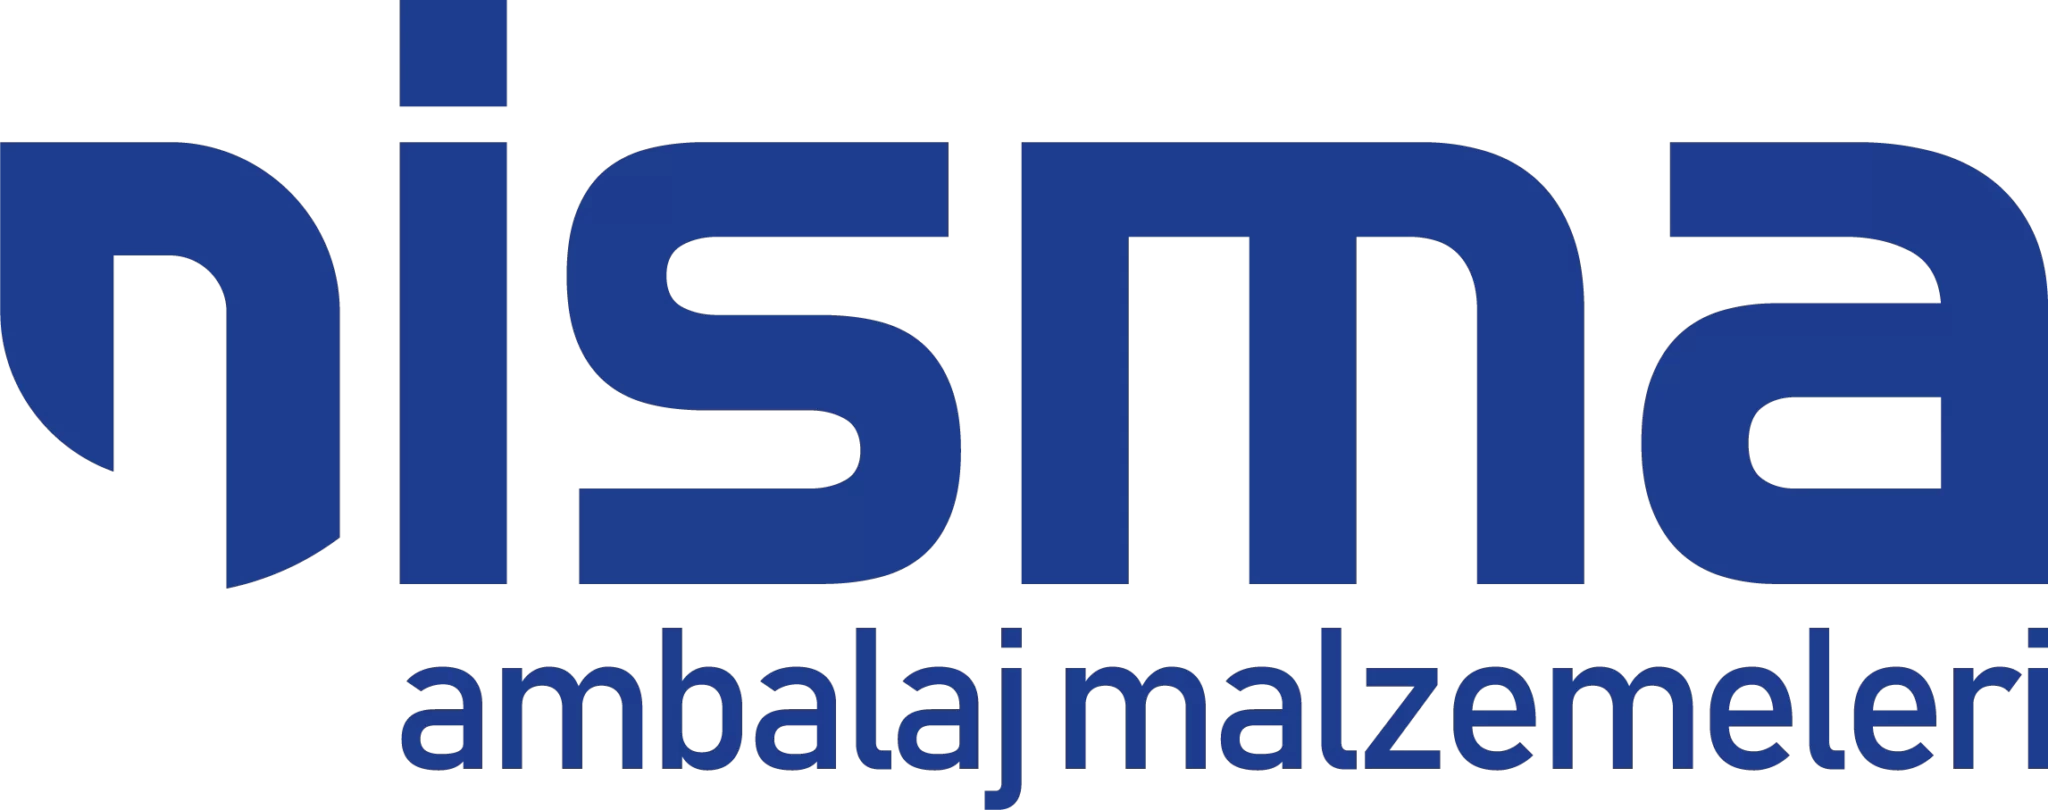 header mobil logo